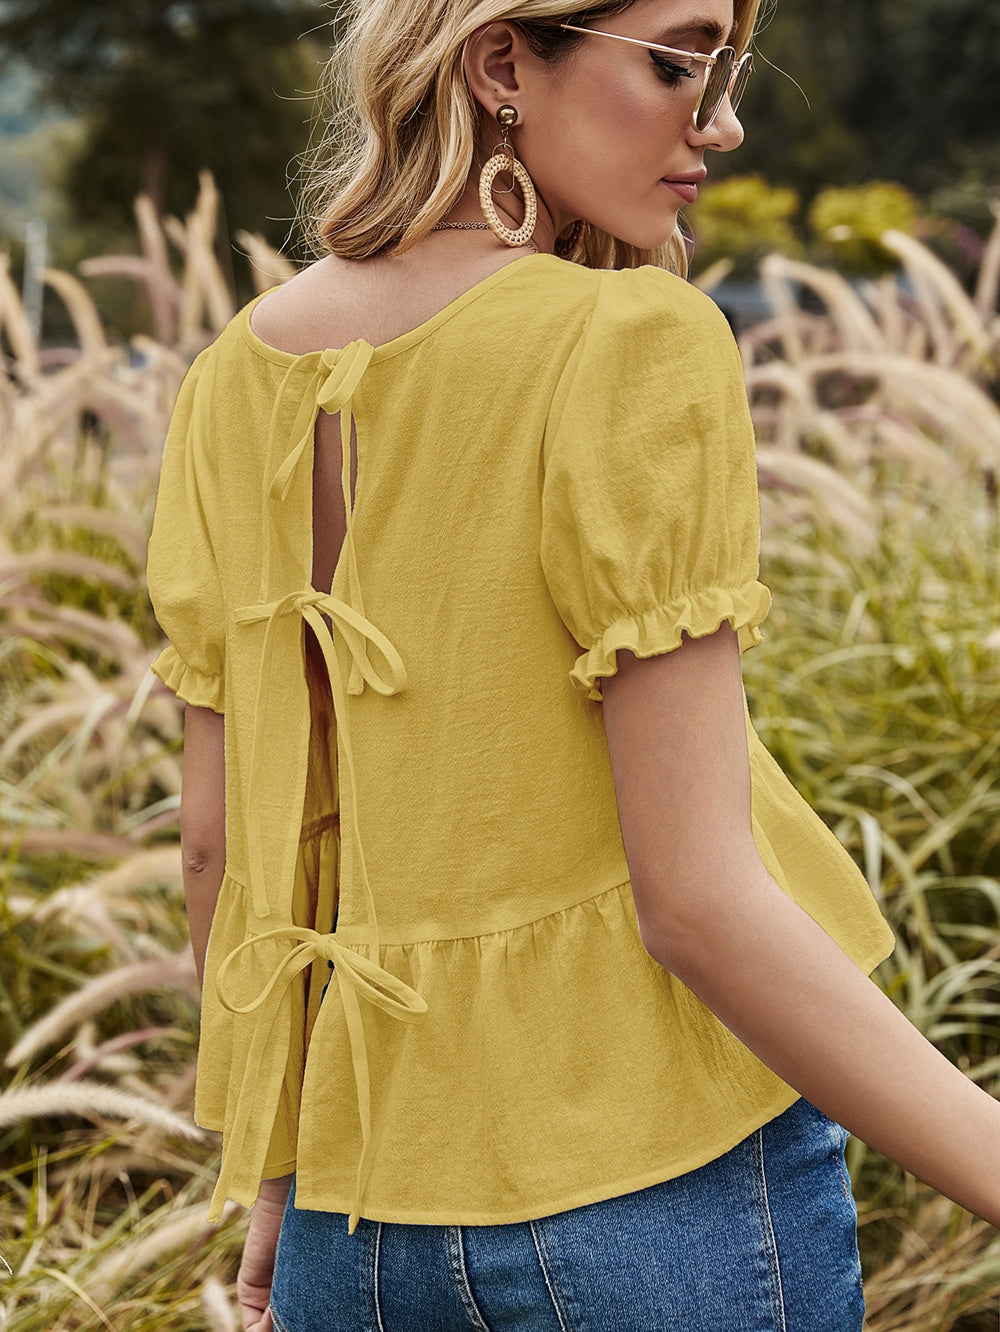 Ladies Halter Strap Cotton Sweet Yellow Short-sleeved T-shirt Top Sai Feel